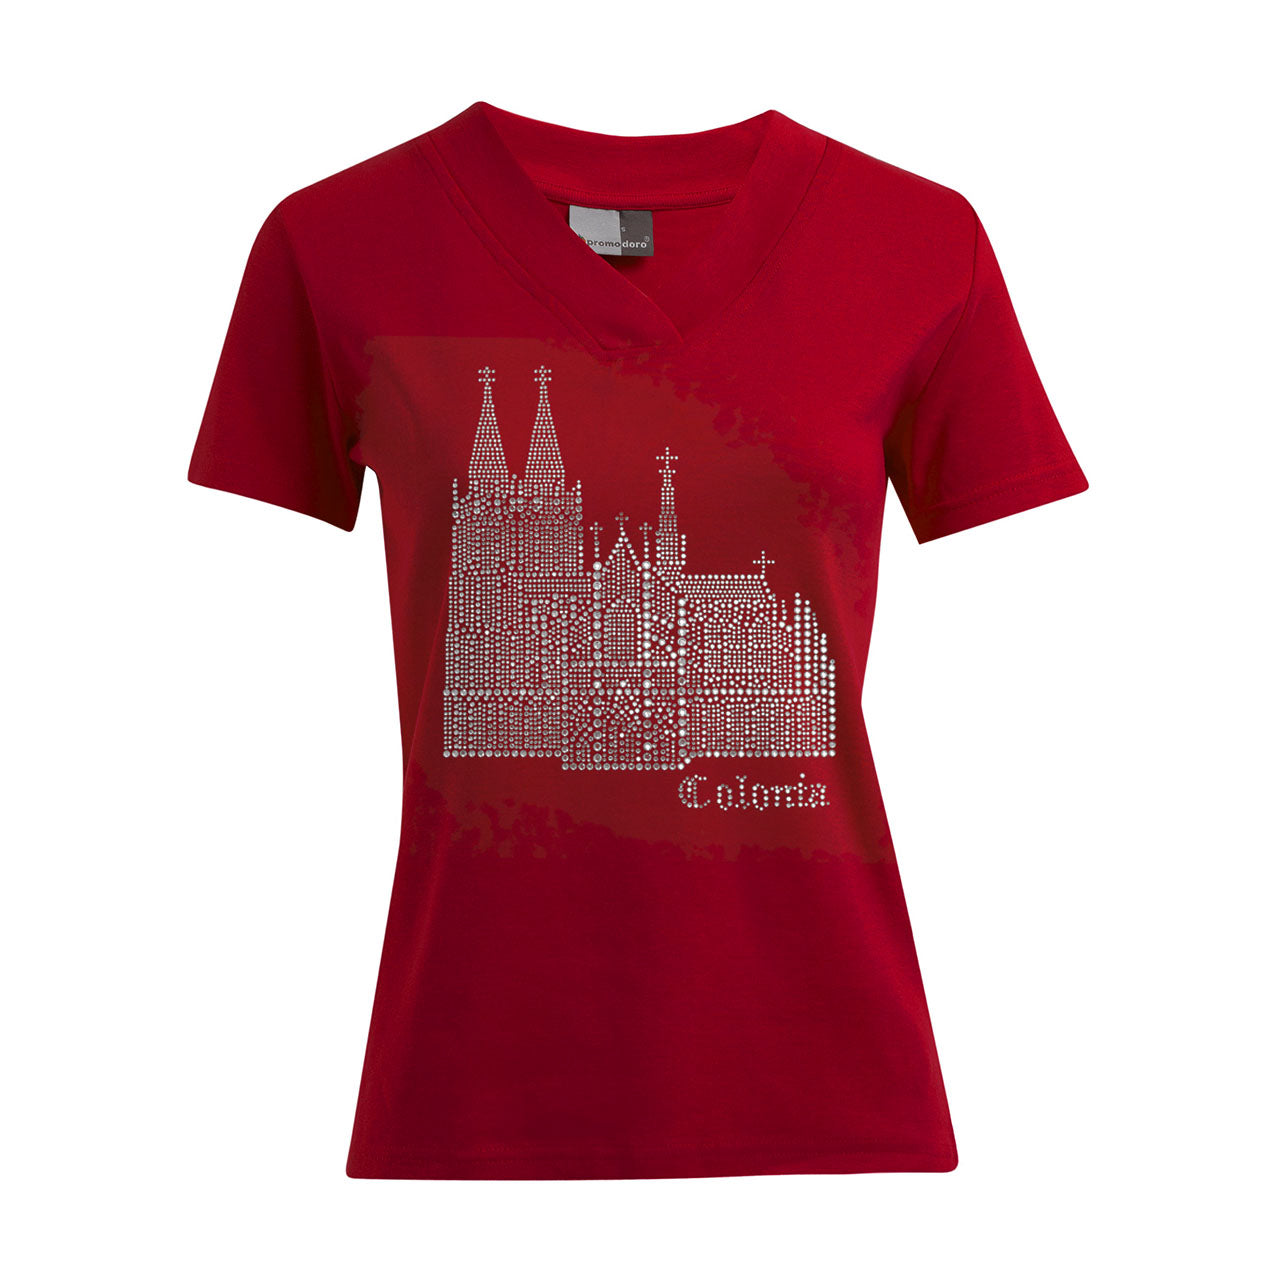 Damen T-Shirt mit V-Ausschnitt - Dom Colonia - Strass